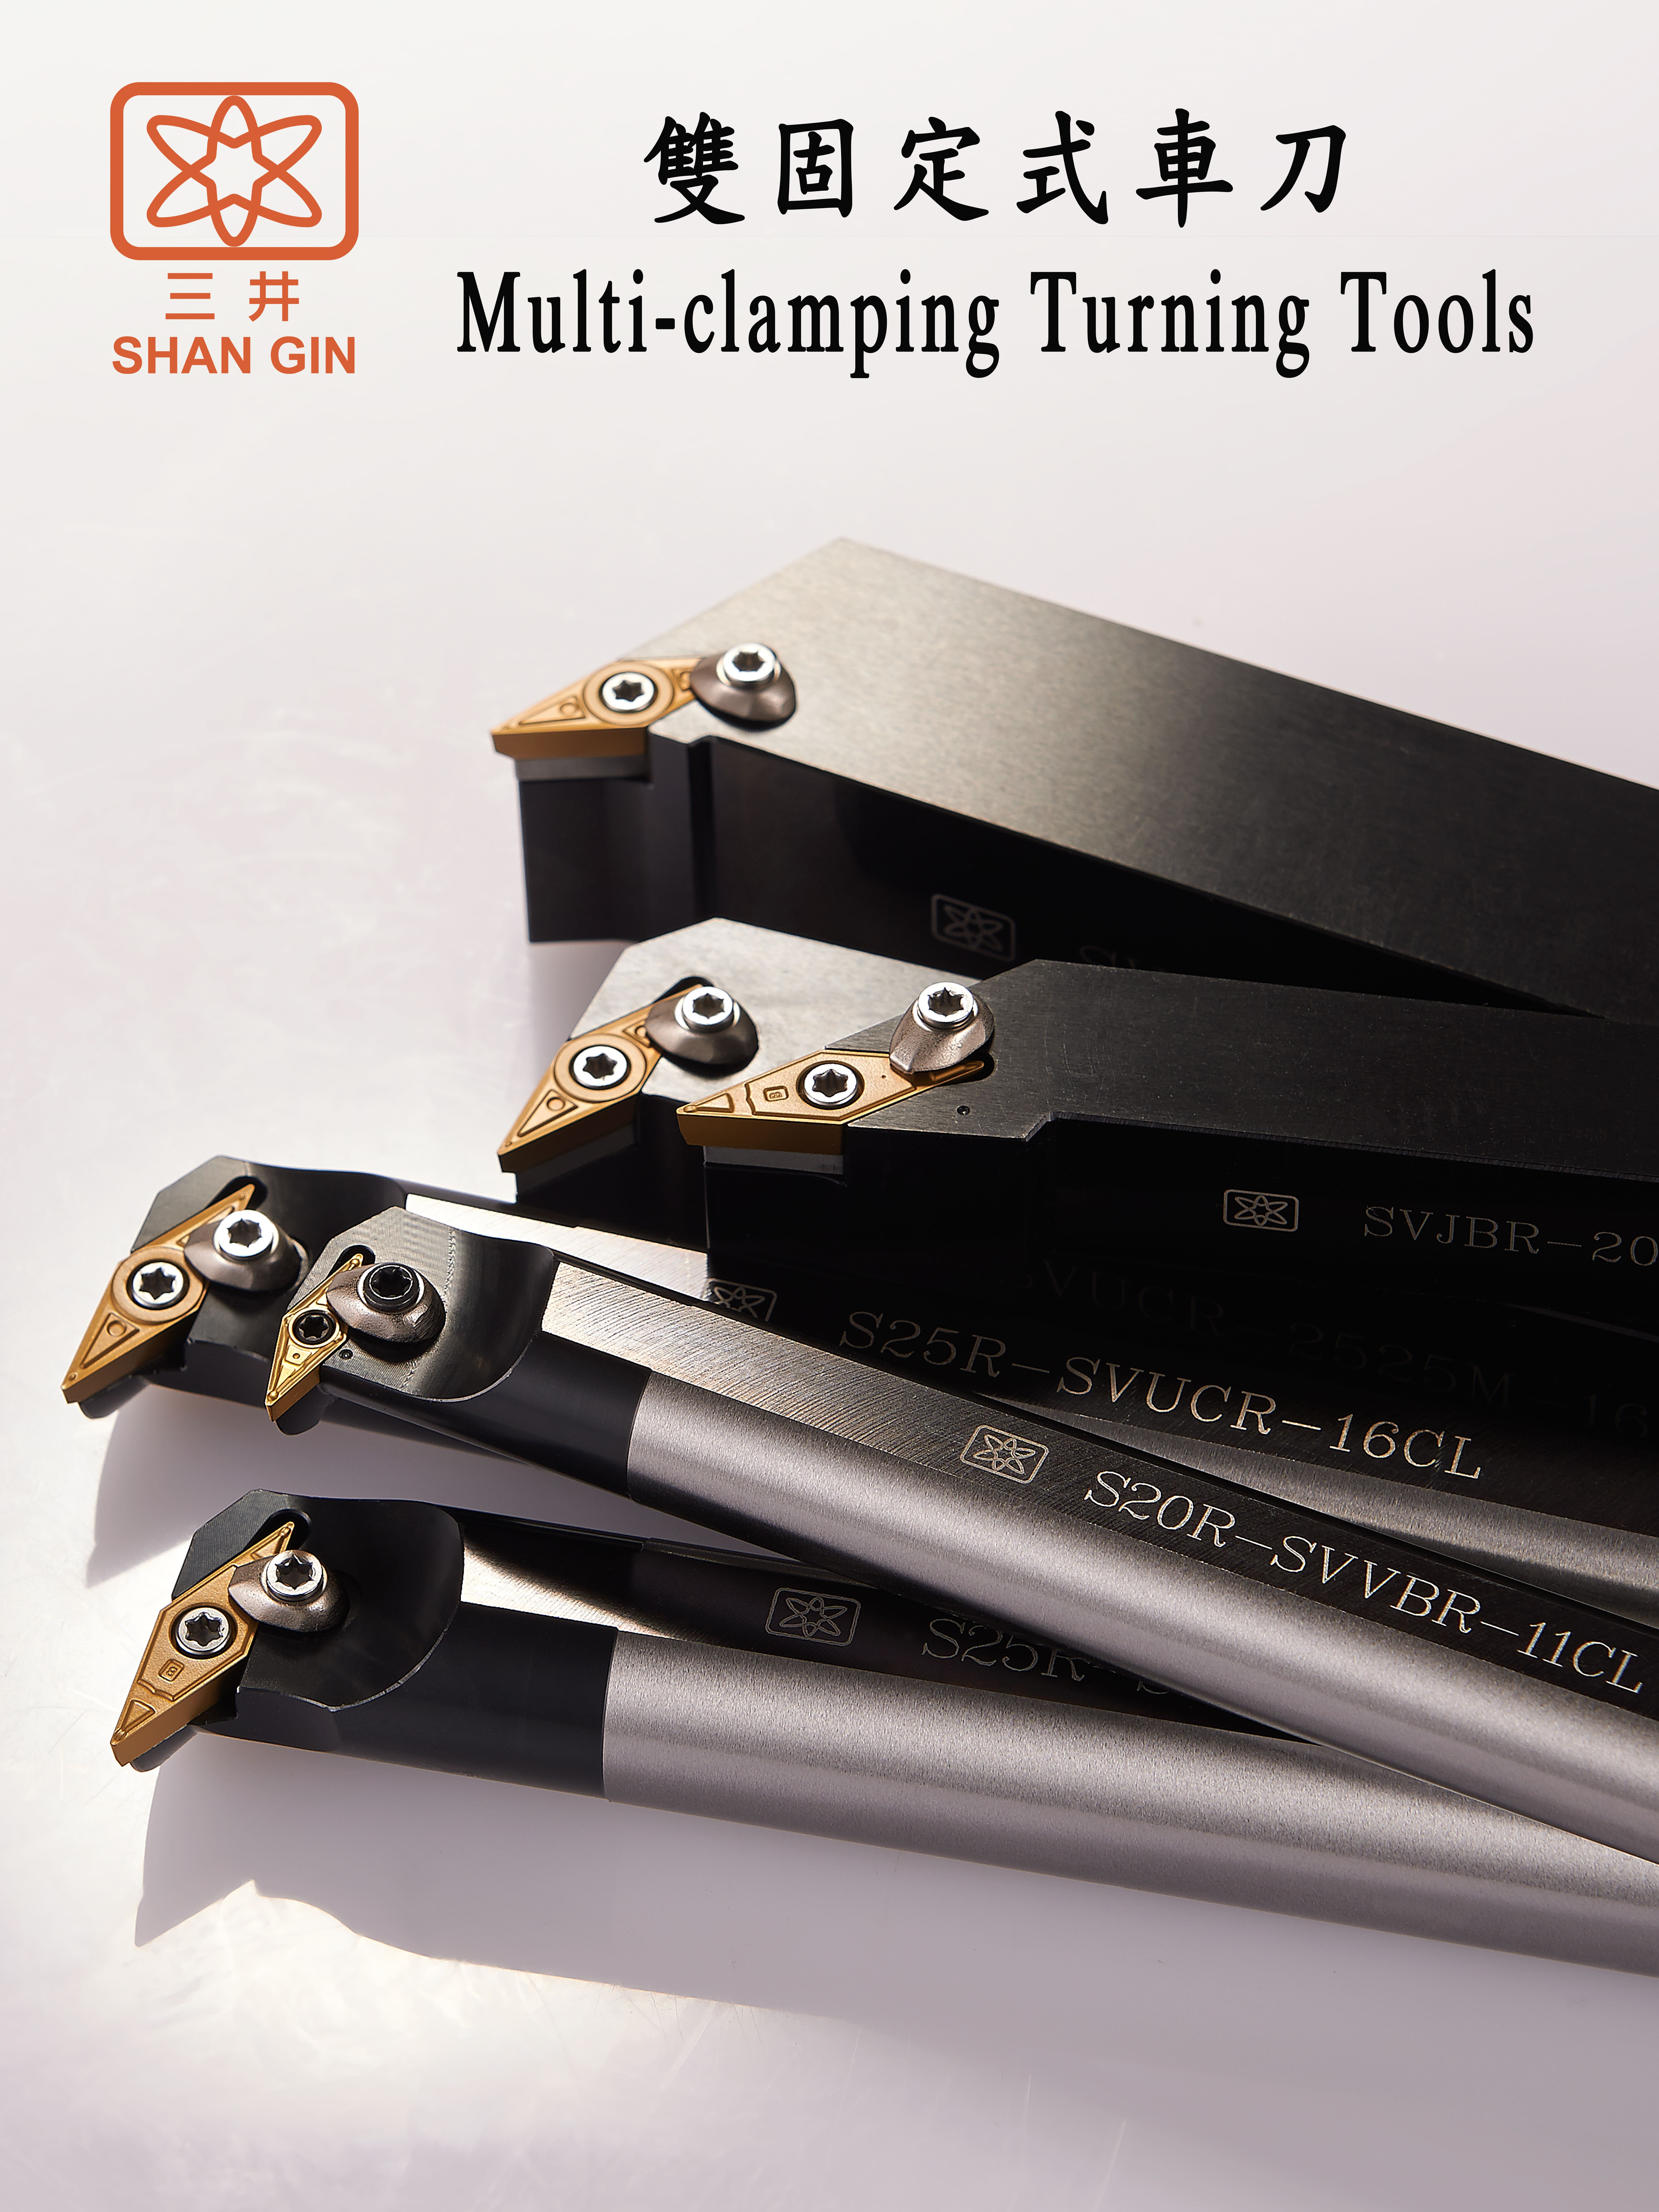 Catalog|Multi-clamping Turning Tools